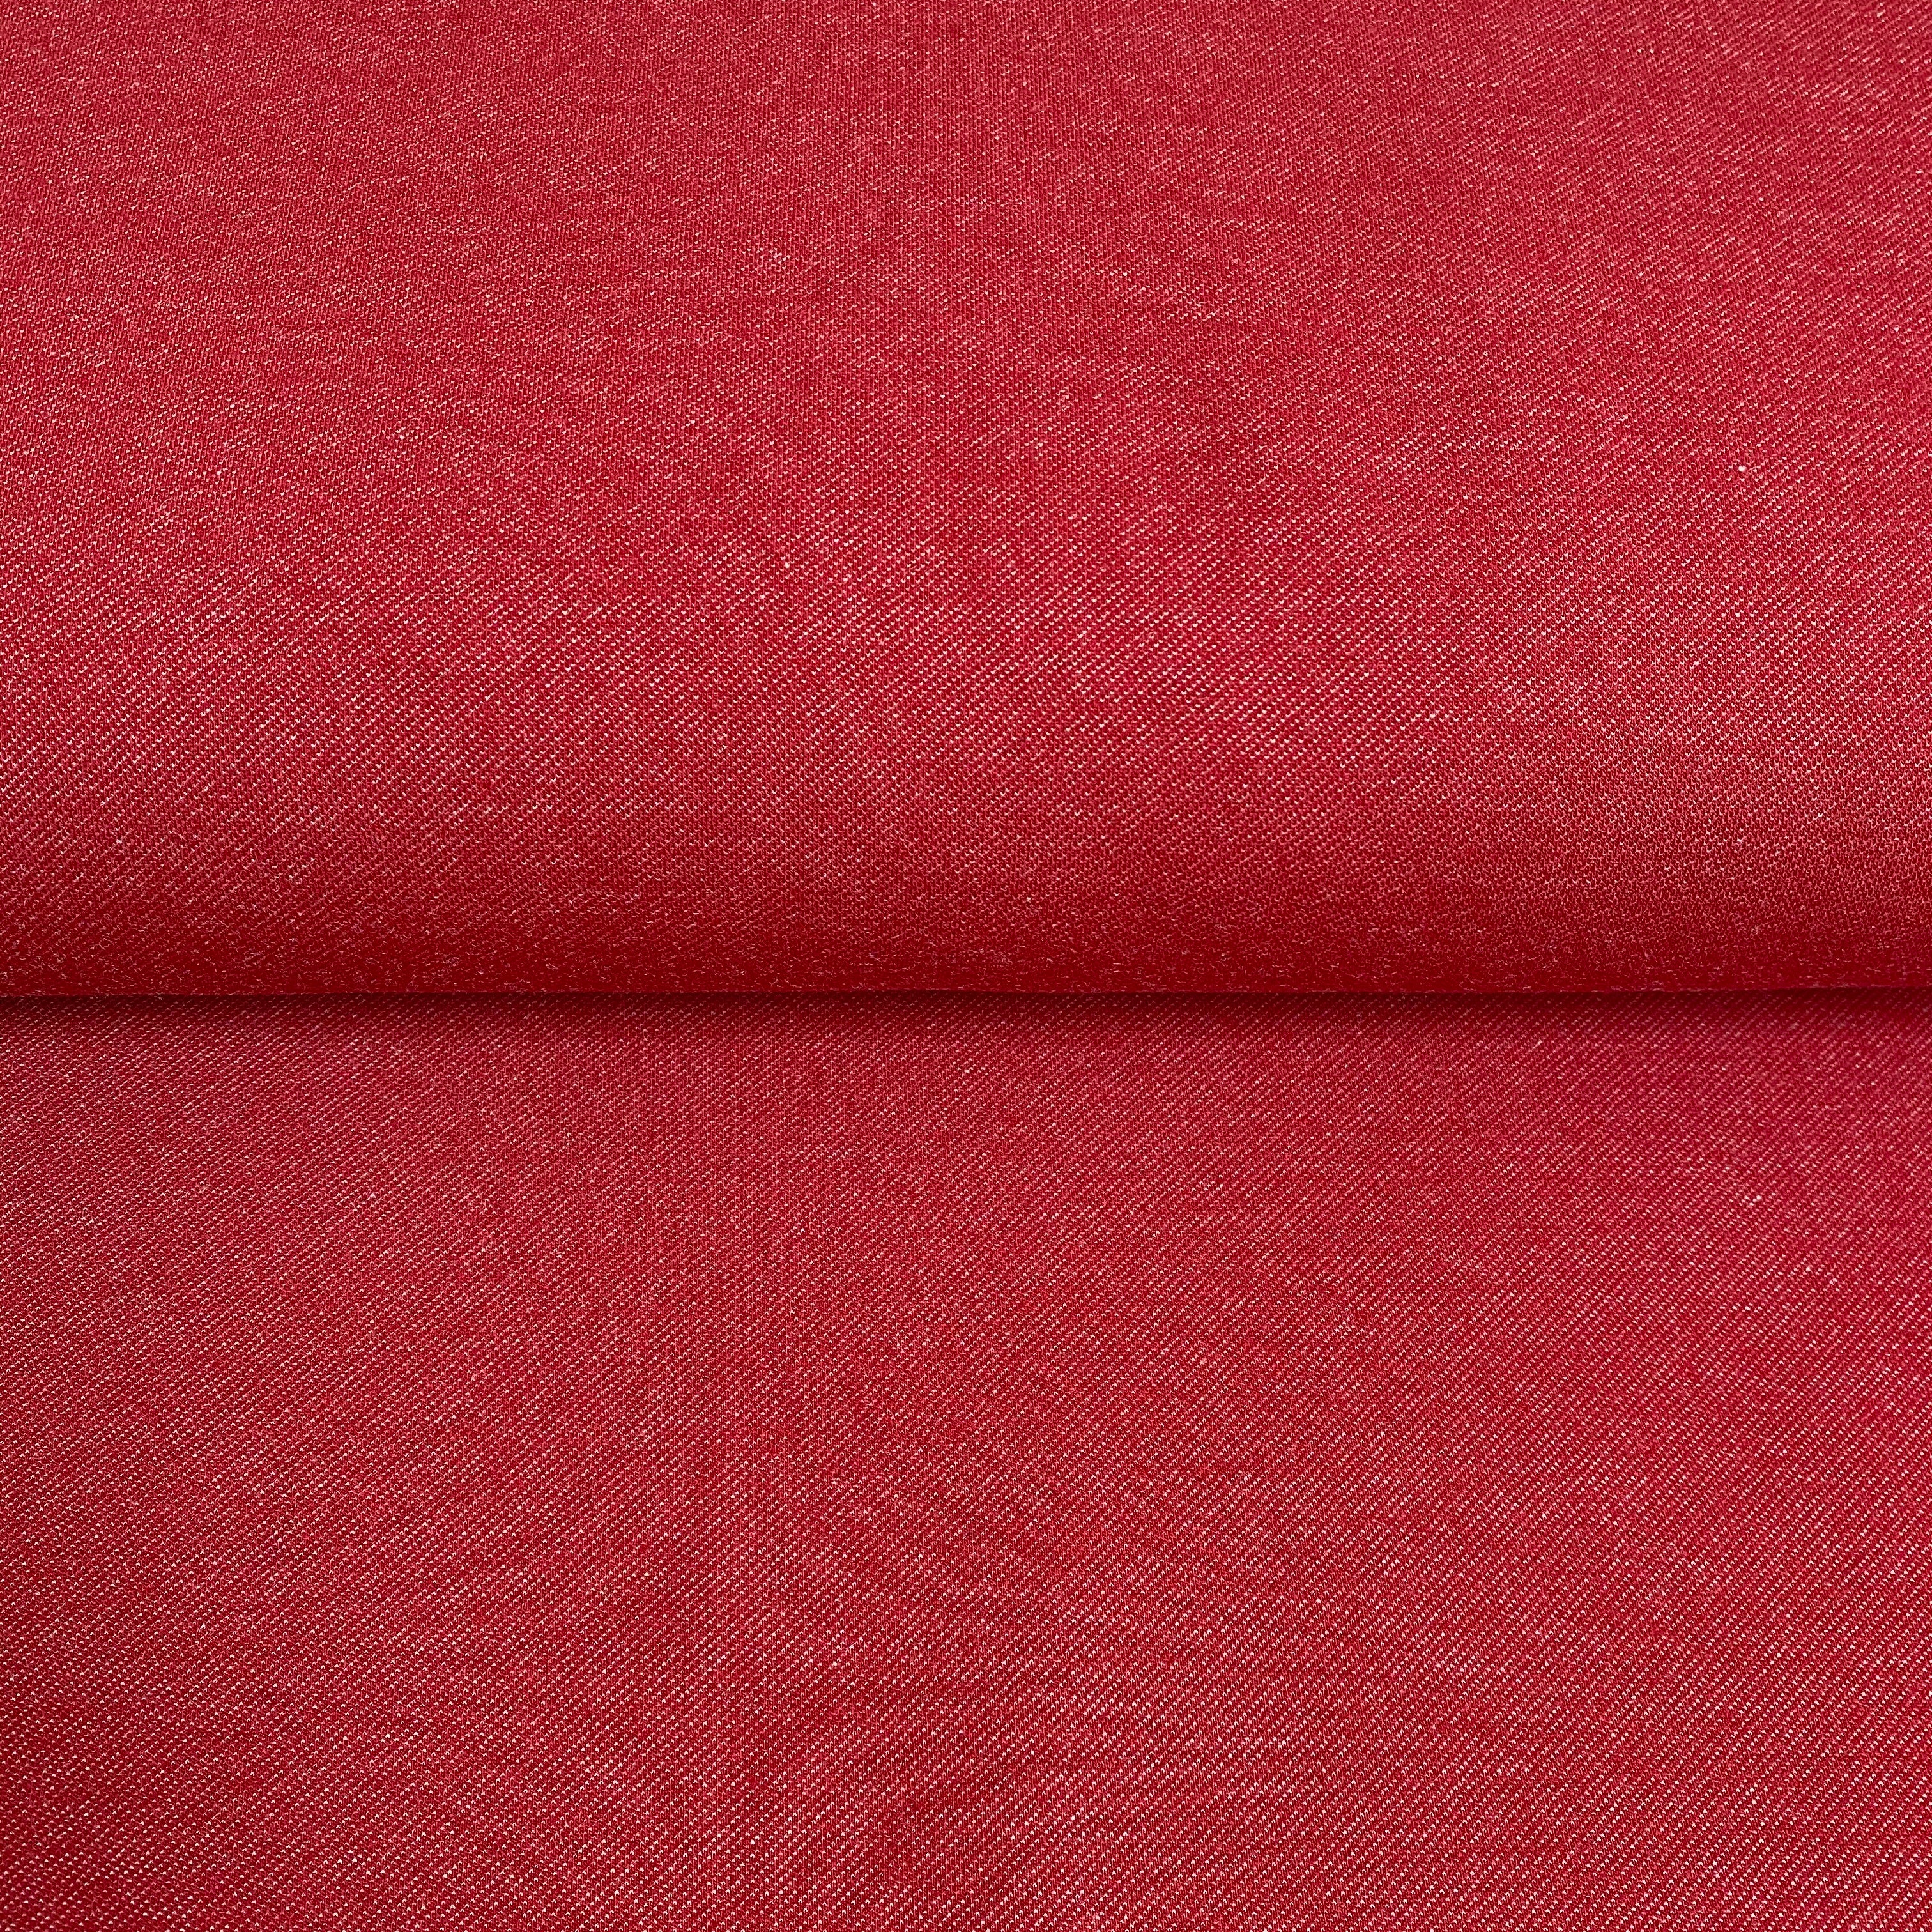 Denim Red Ditsy Print - Bloomsbury Square Dressmaking Fabric